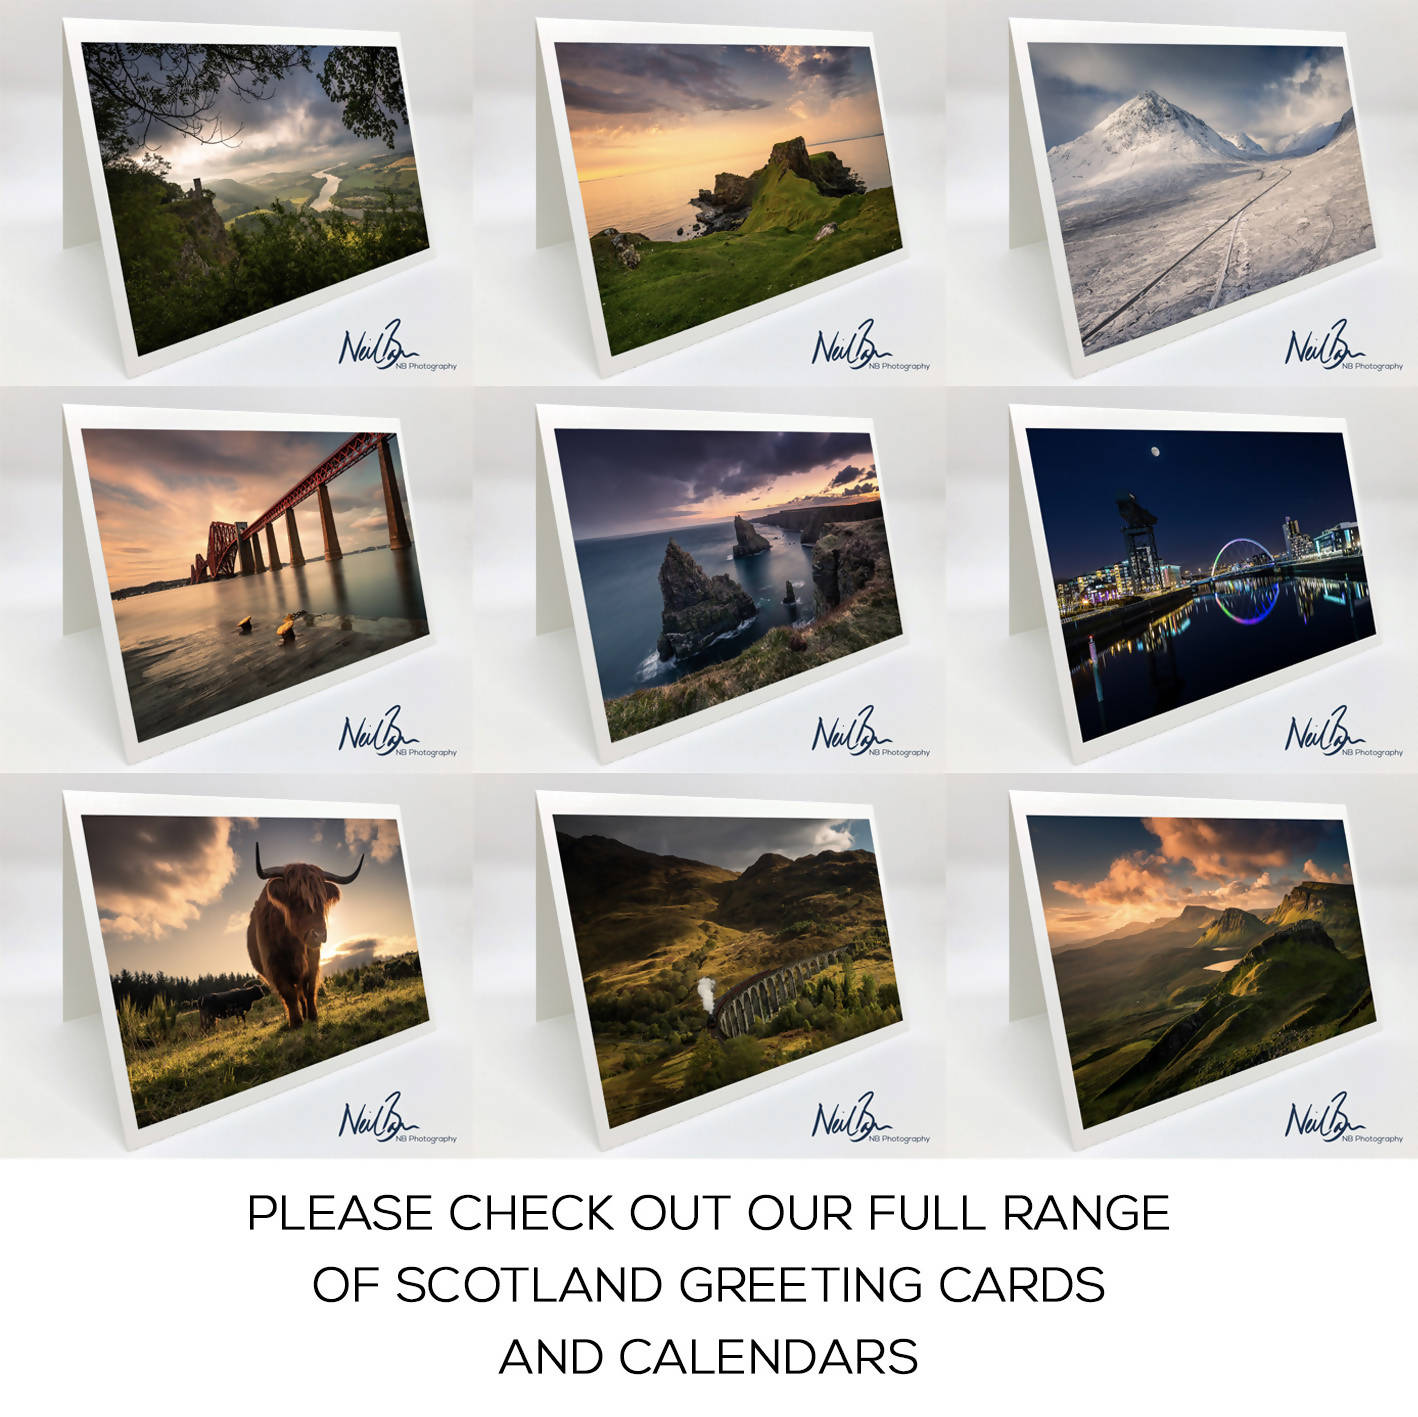 Buachaille Etive Mòr from West Highland Way - Scotland Greeting Card - Blank Inside